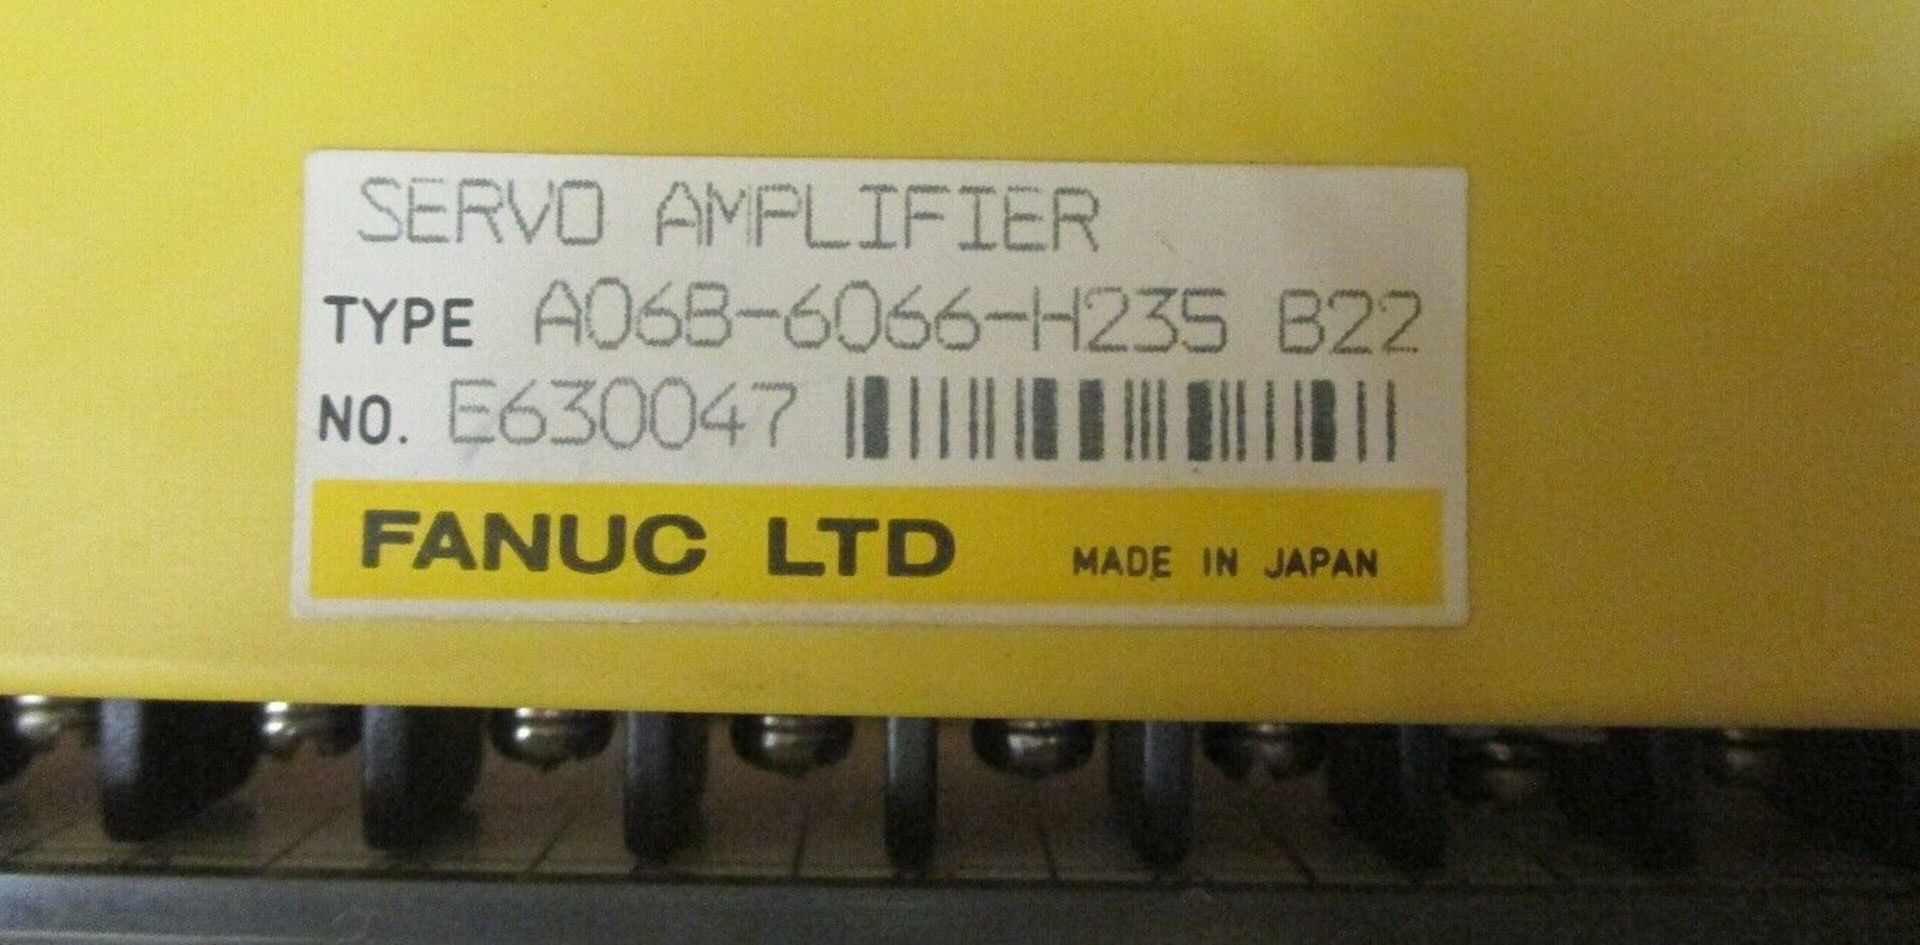 Fanuc A06B-6066-H235 Servo Amplifier Ser C - Image 5 of 5